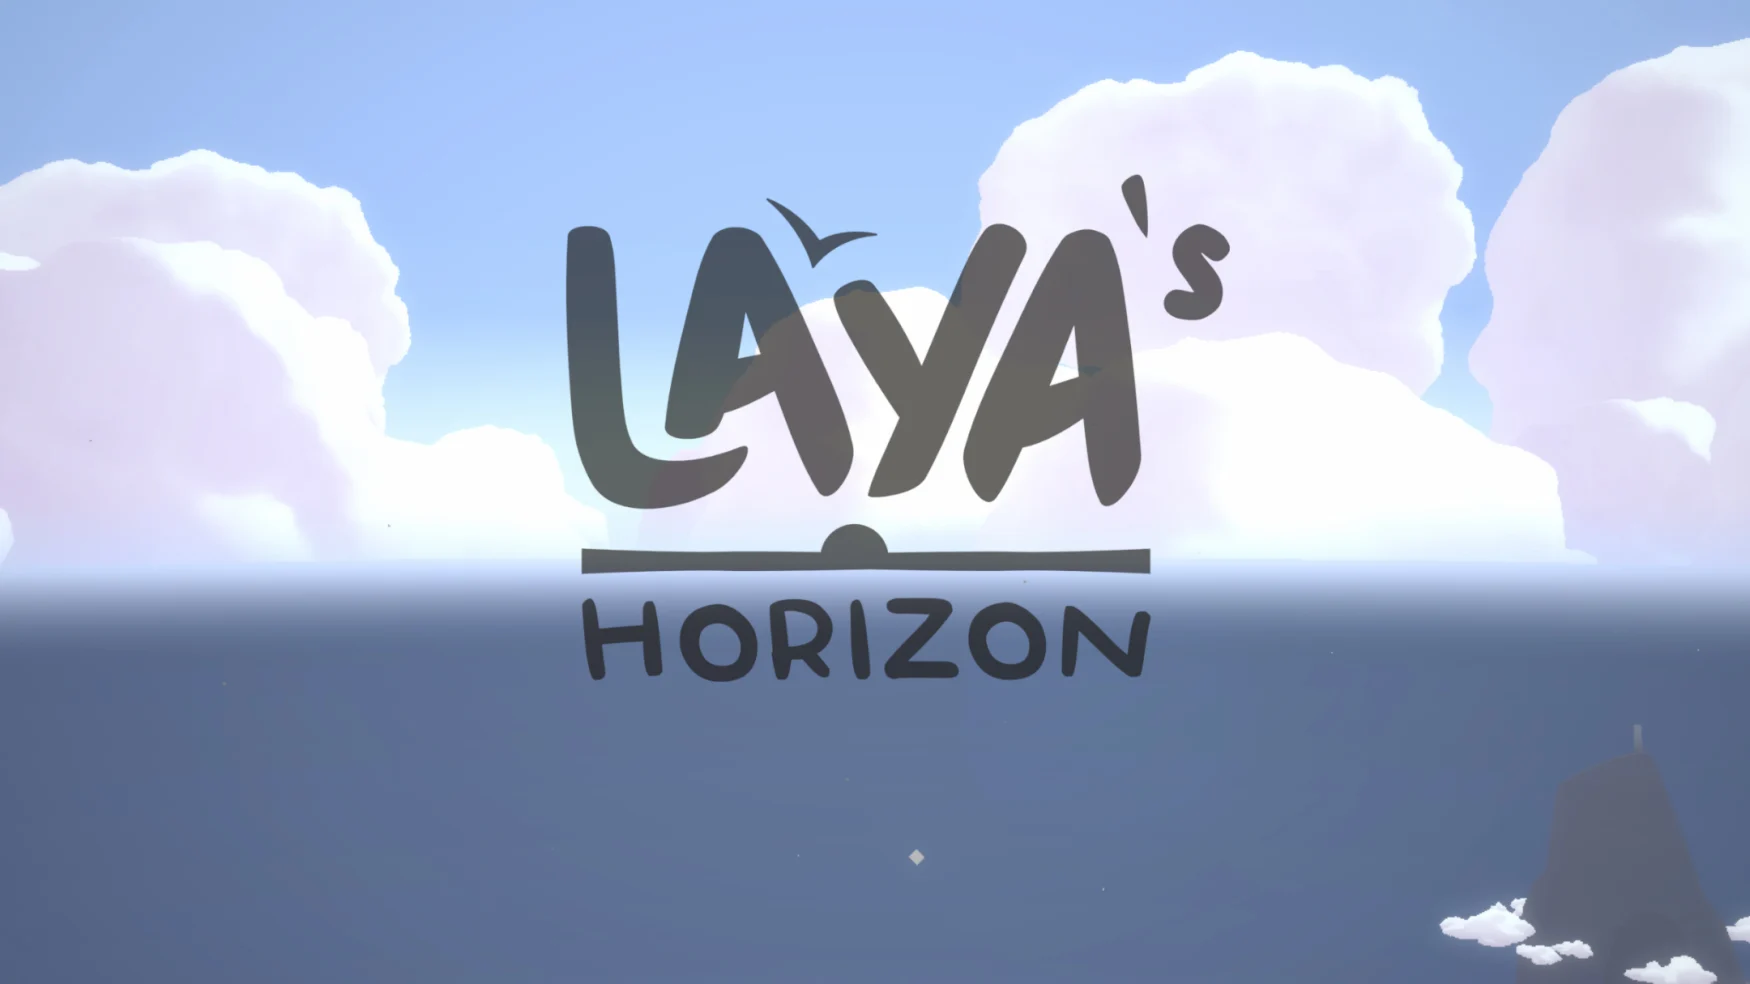 Laya's Horizon title screen.